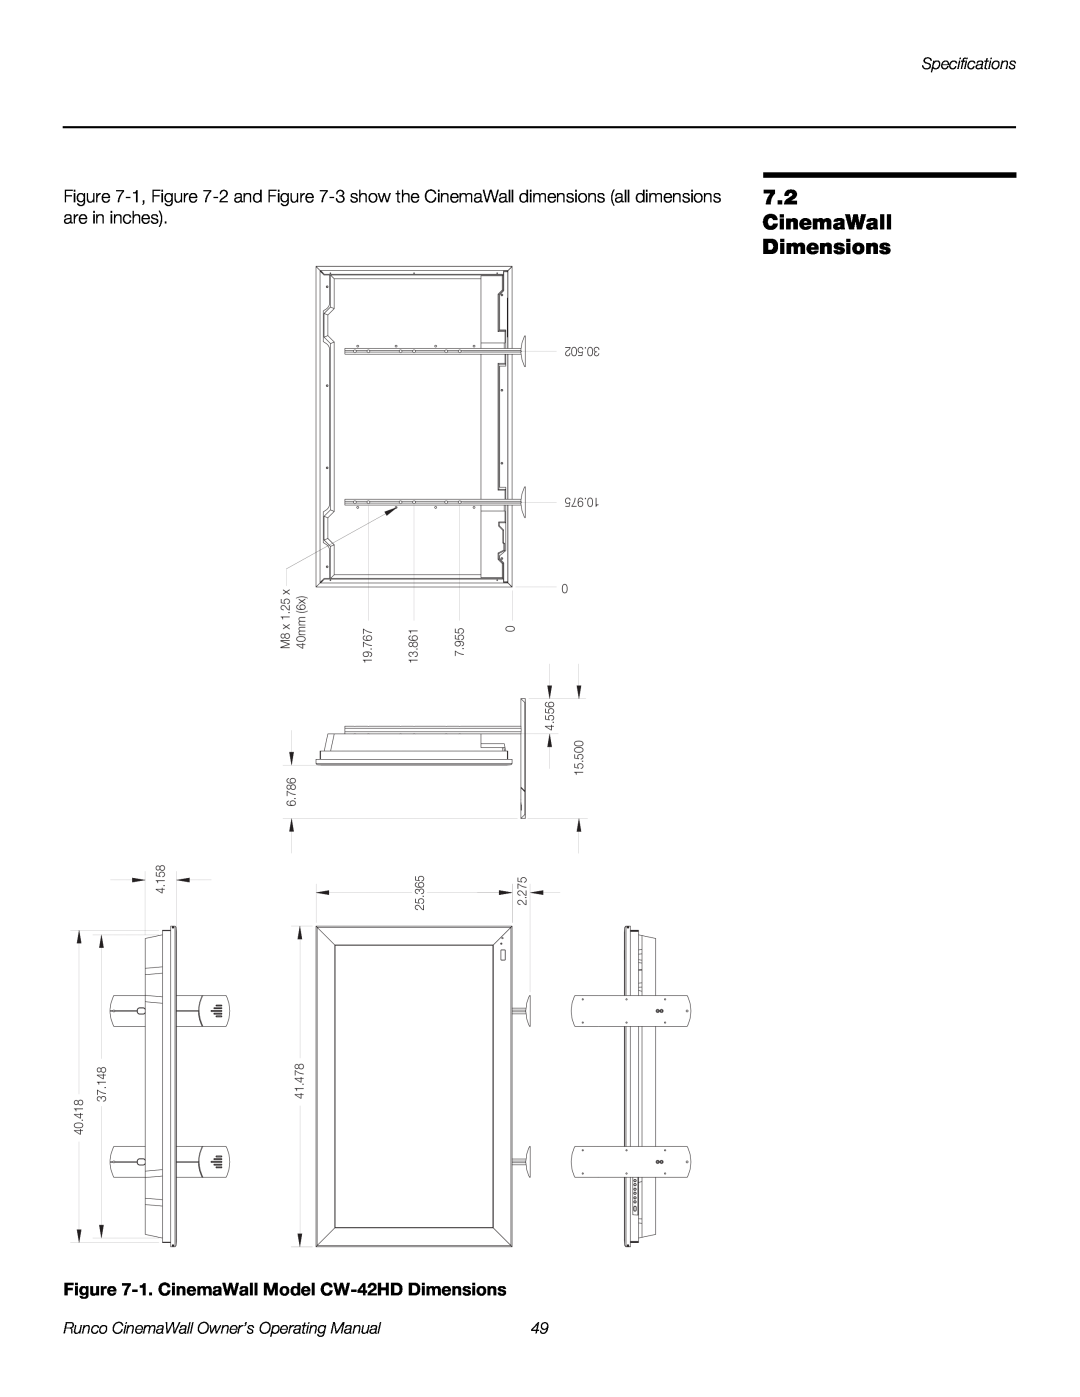 Runco CW-50XA 1. CinemaWall Model CW-42HD Dimensions, Specifications, Runco CinemaWall Owner’s Operating Manual 